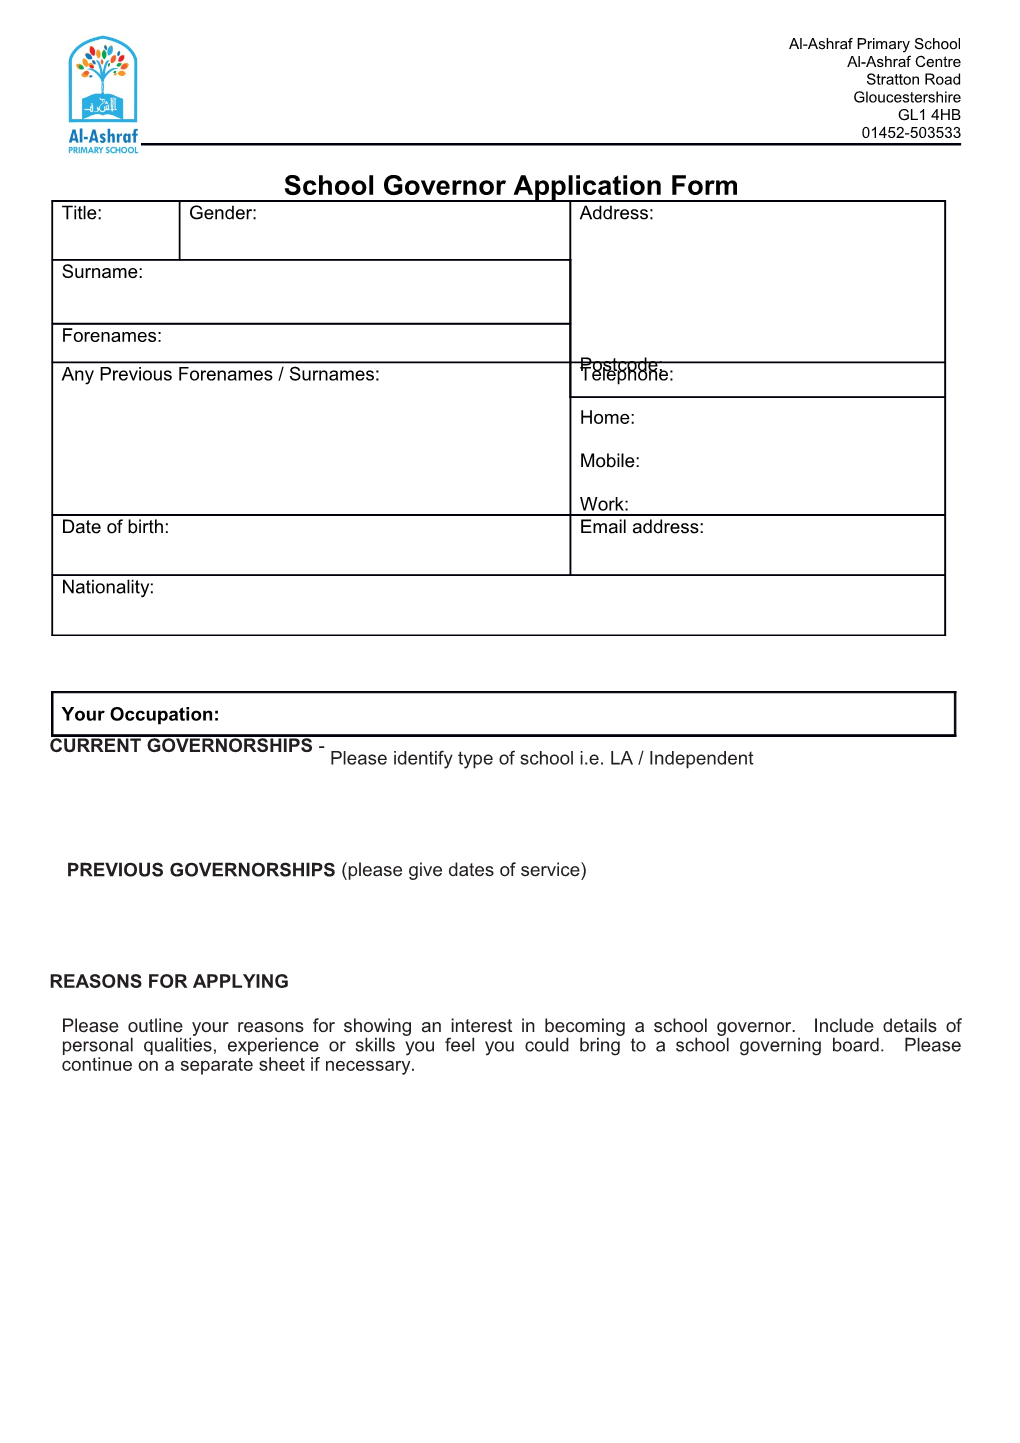 School Governor Application Form